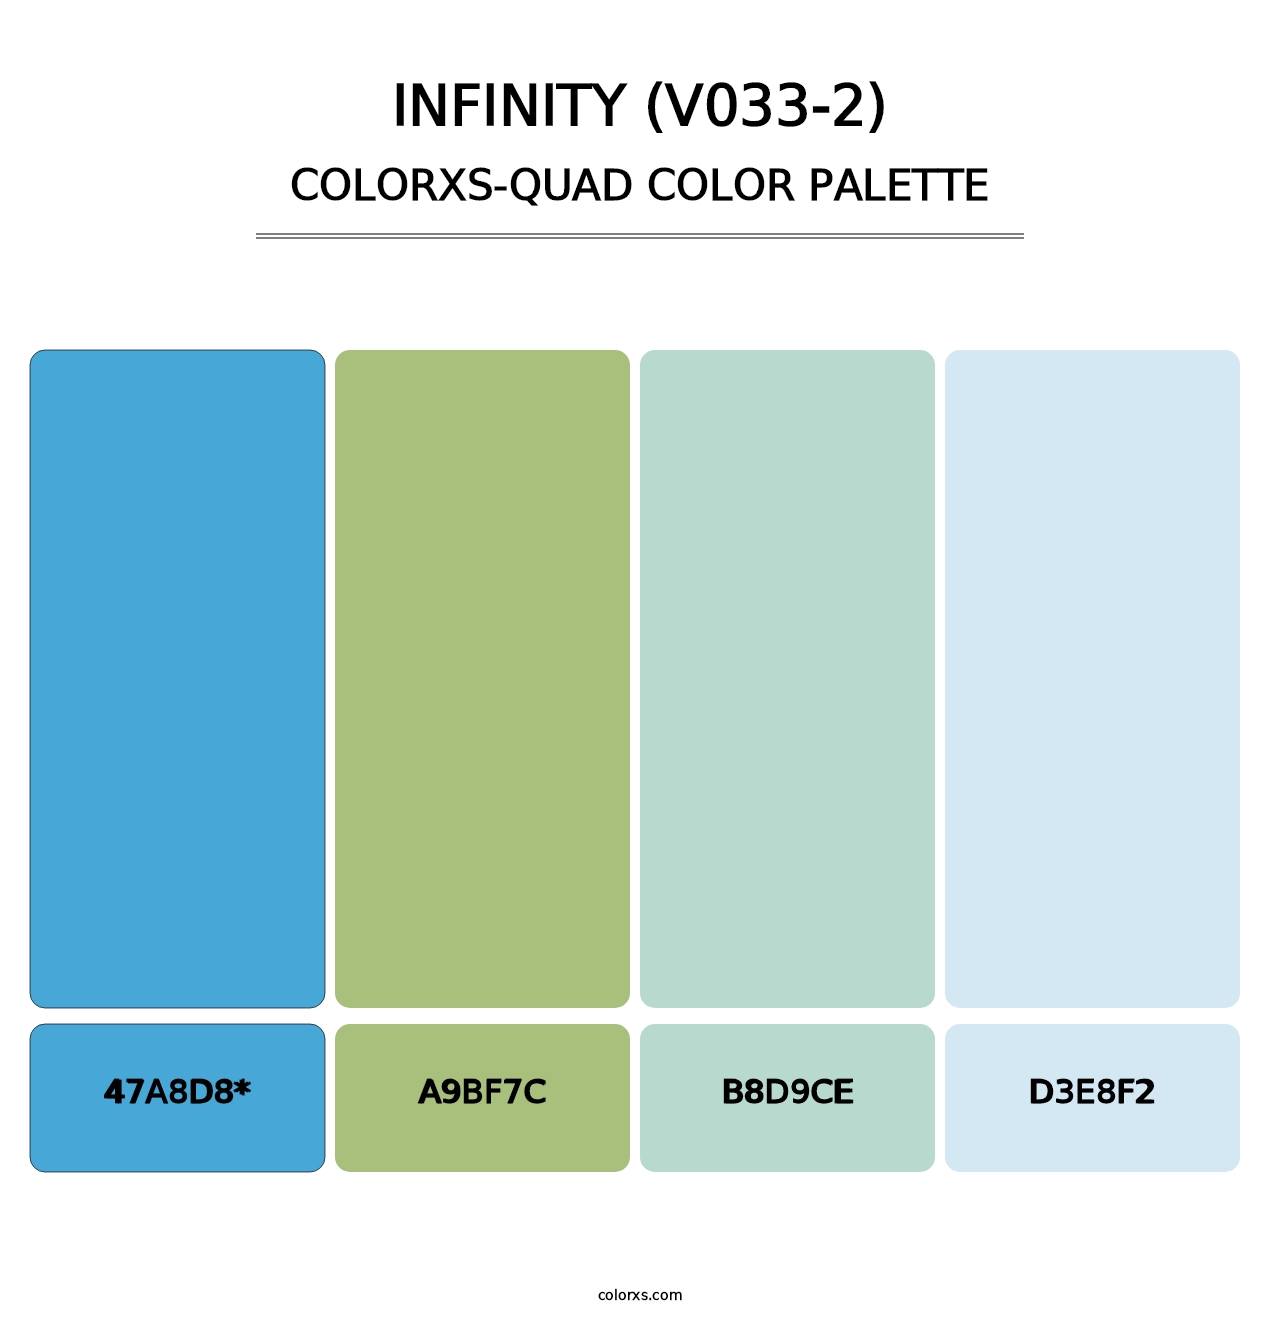 Infinity (V033-2) - Colorxs Quad Palette